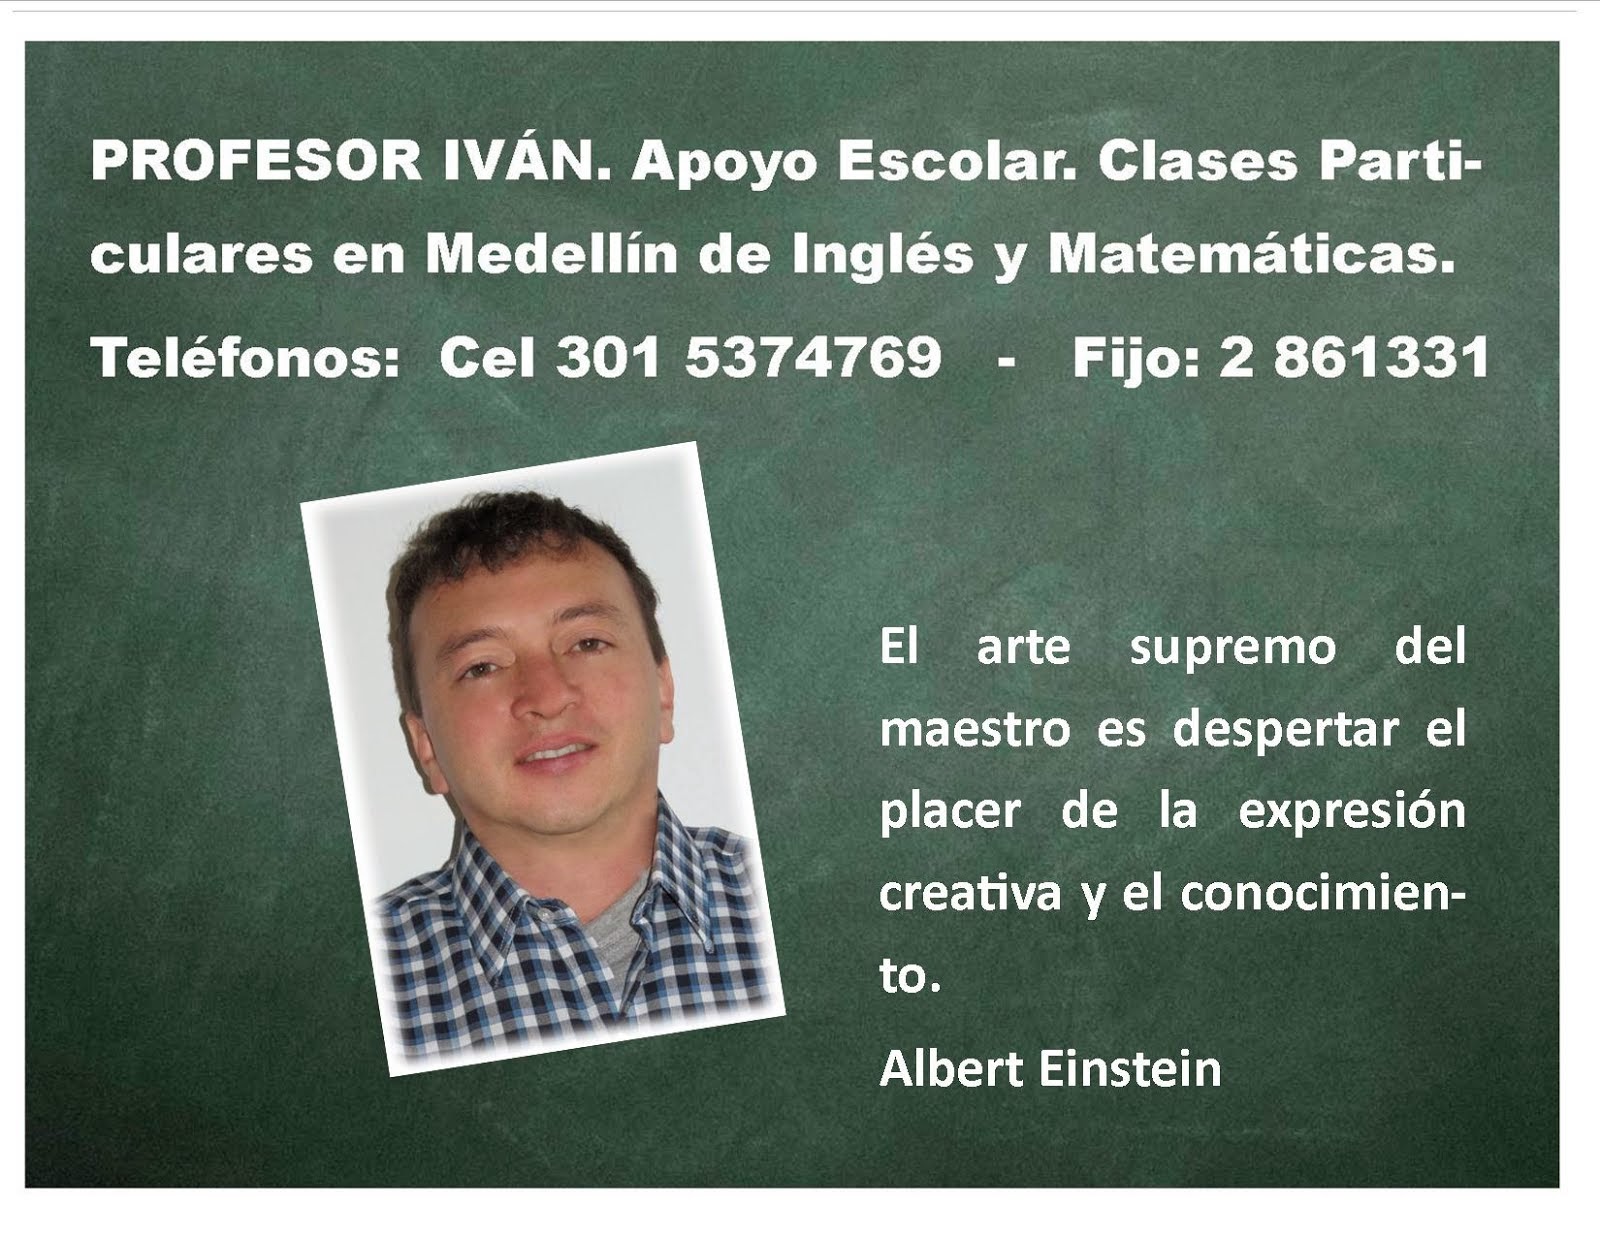 Profesor Iván en Medellín